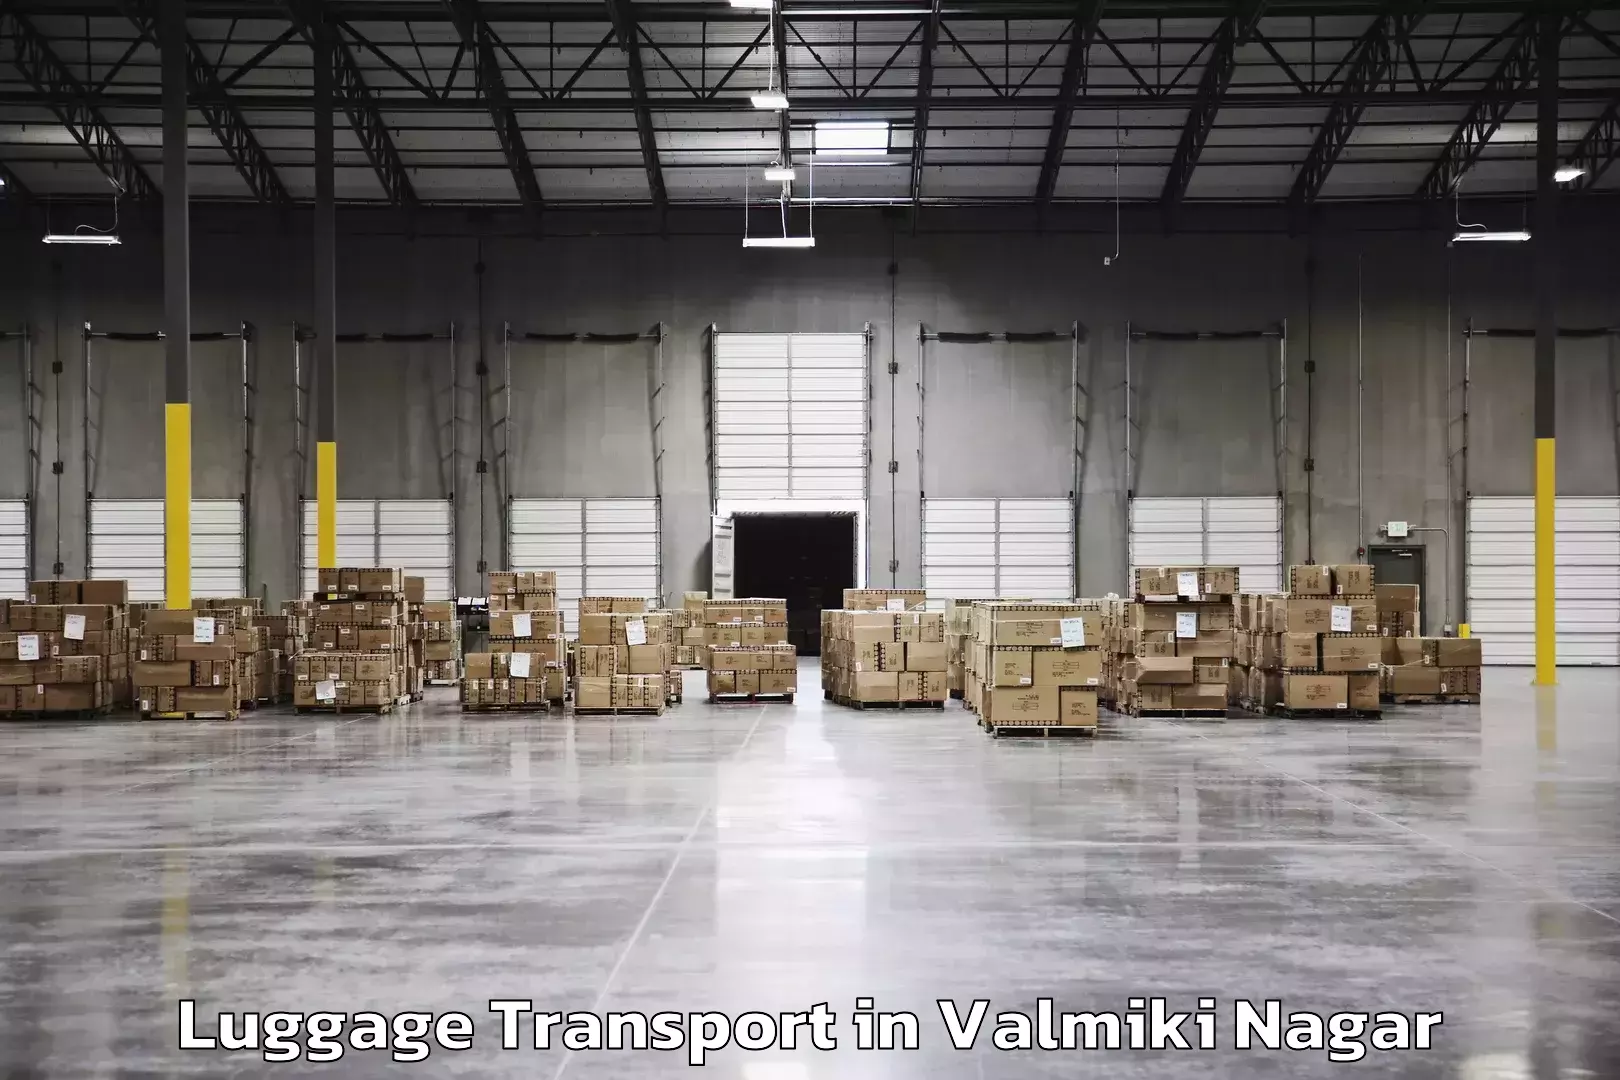 Luggage transport operations in Valmiki Nagar